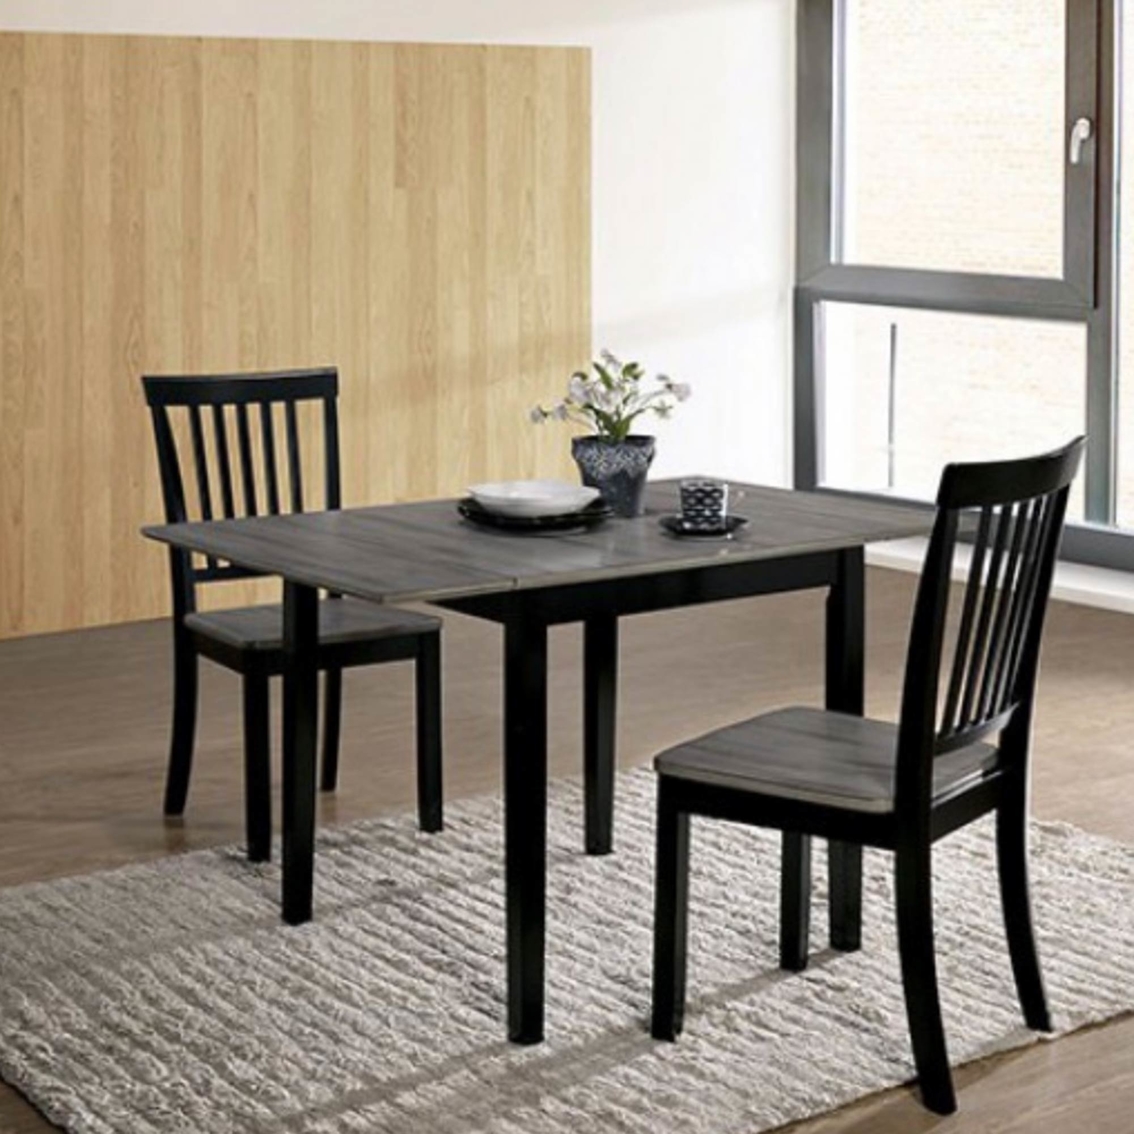 Furniture of America Evie 3 pk. Dining Set - Image 2 of 2